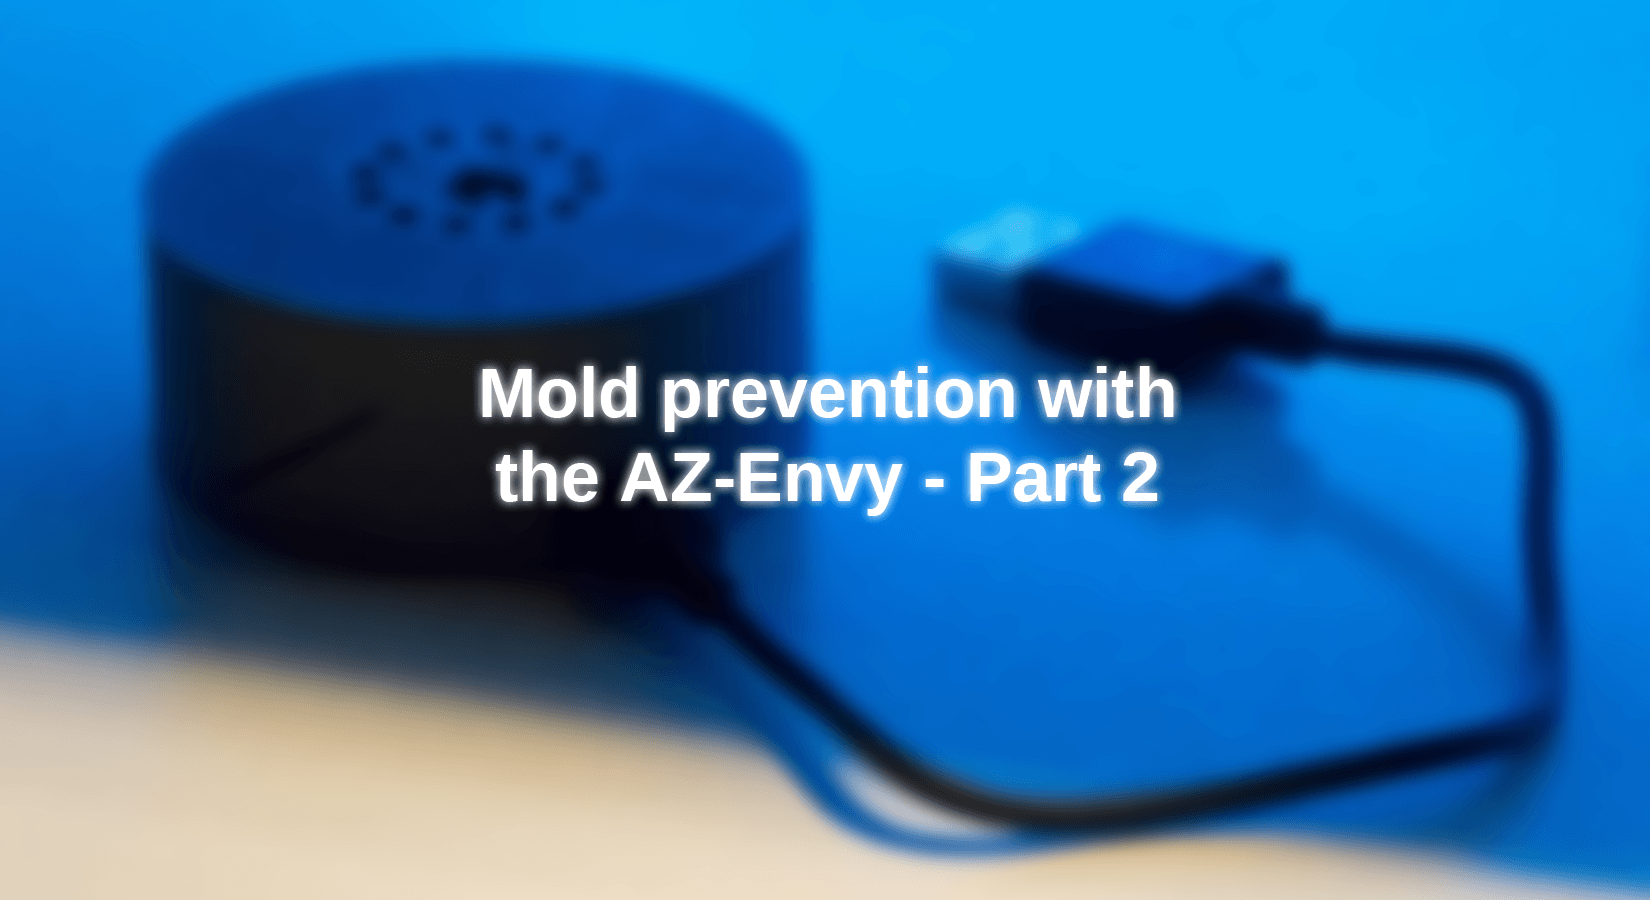 Schimmelprävention mit dem AZ-Envy - Teil 2 - AZ-Delivery